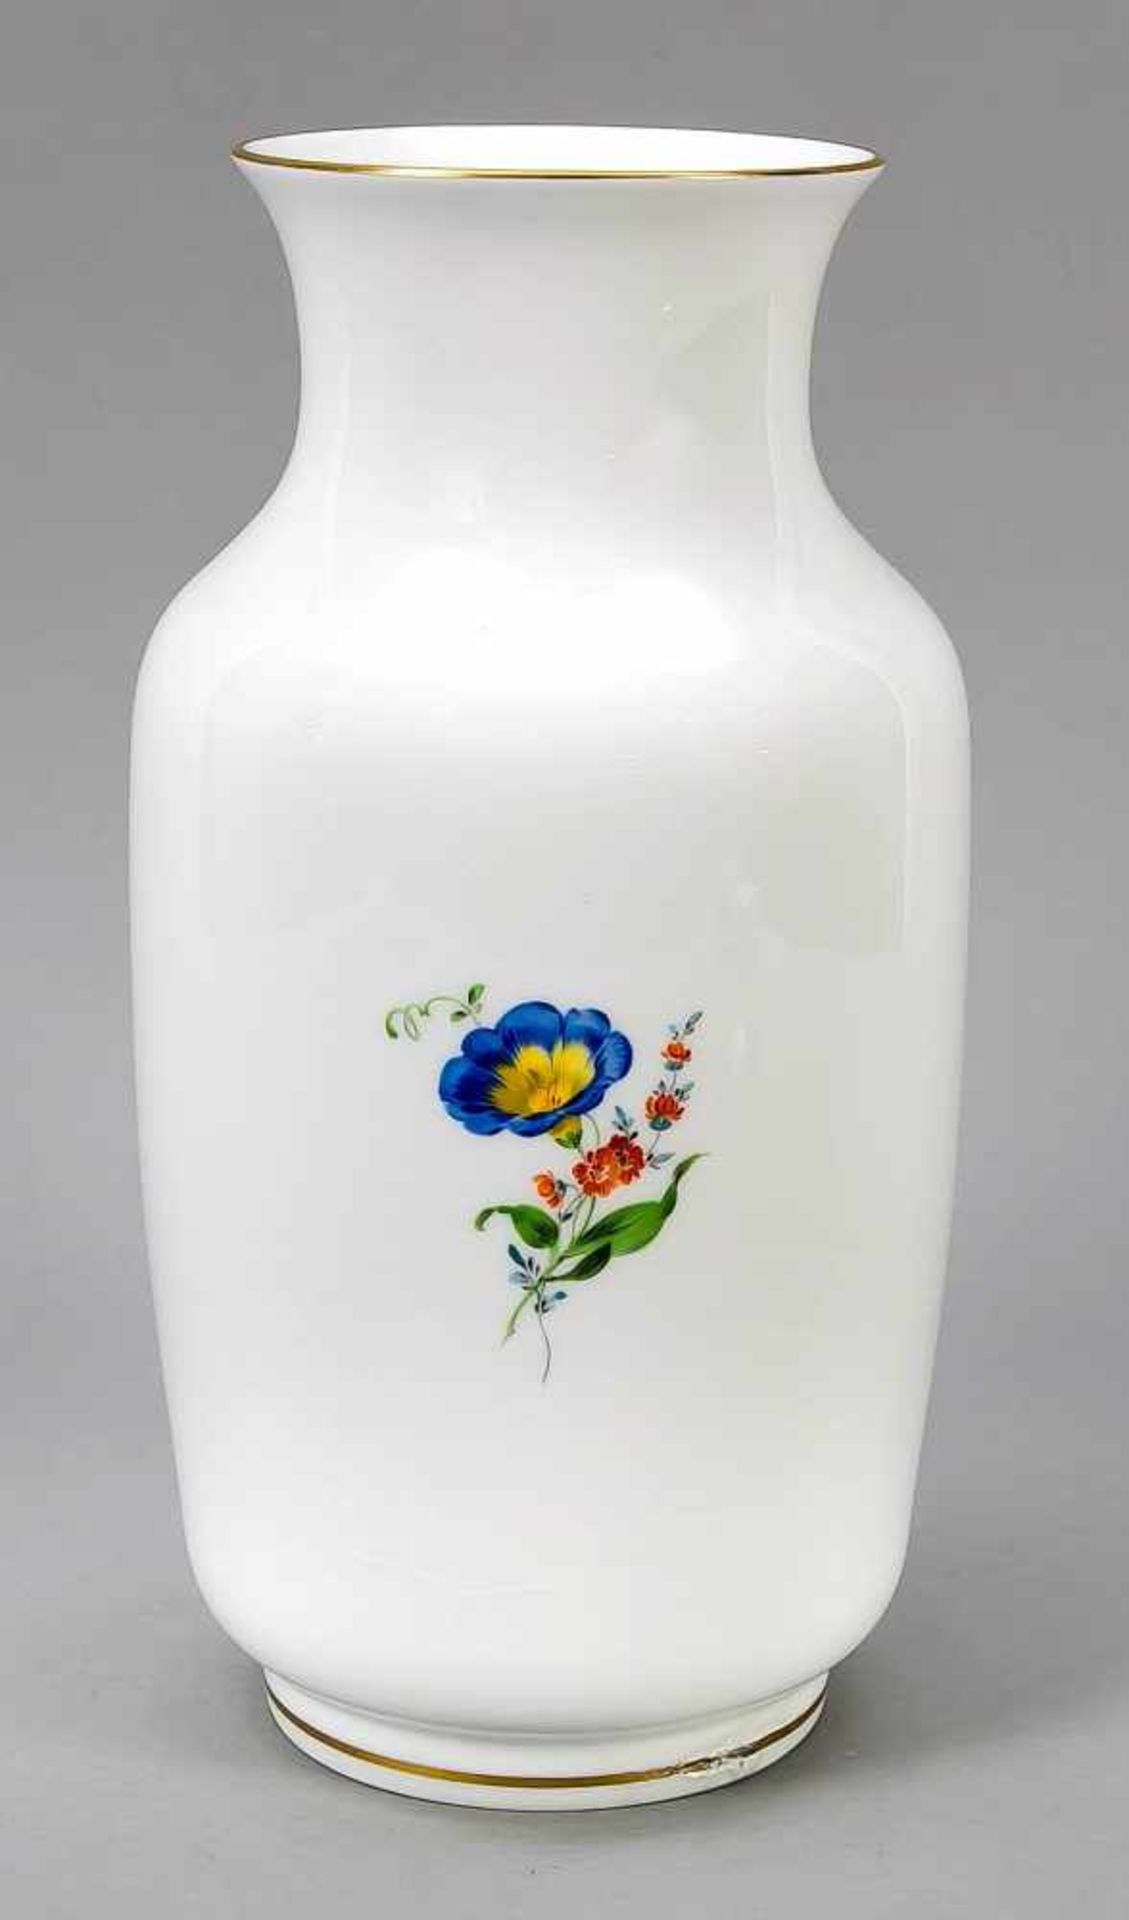 Large vase, Meissen, mark 1970s, 1st quality, polychrome flower painting on both sides,gold rim, - Image 2 of 2